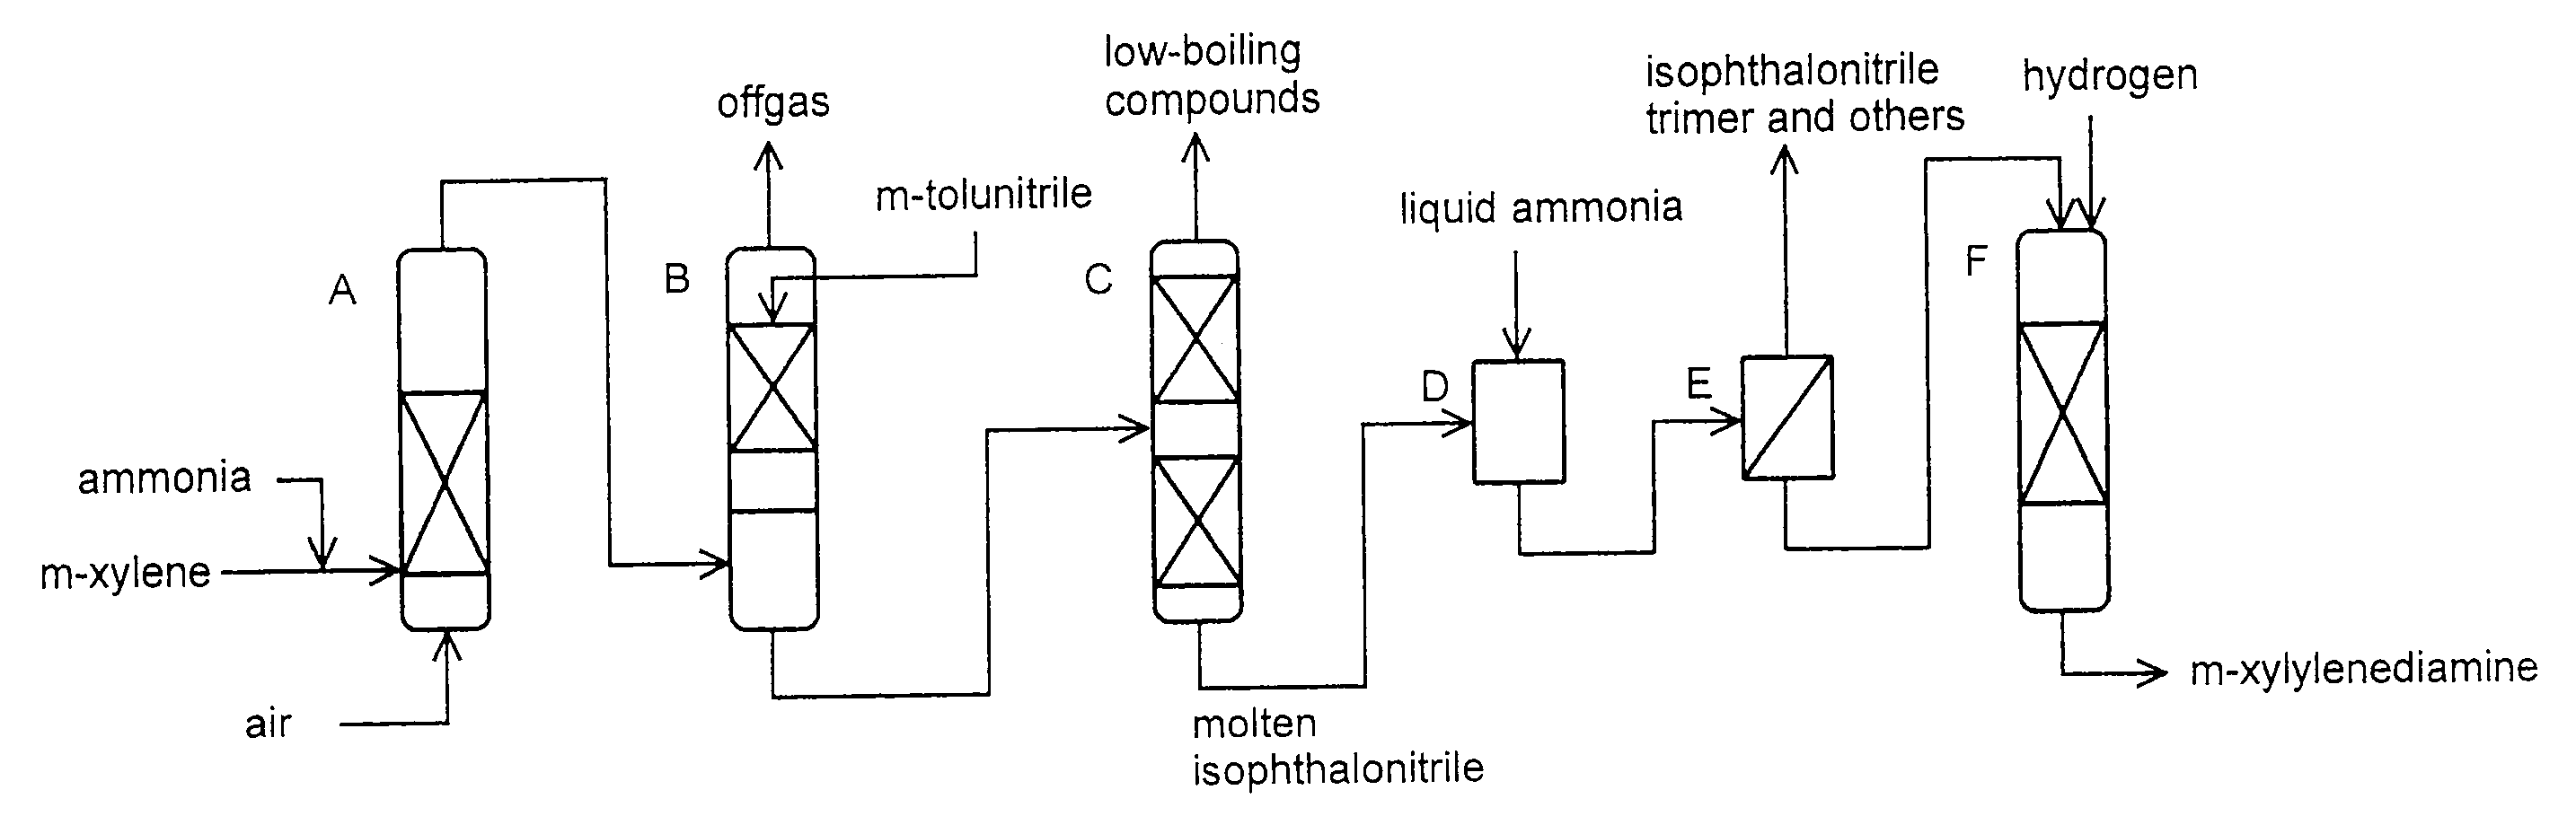 Production method of xylylenediamine